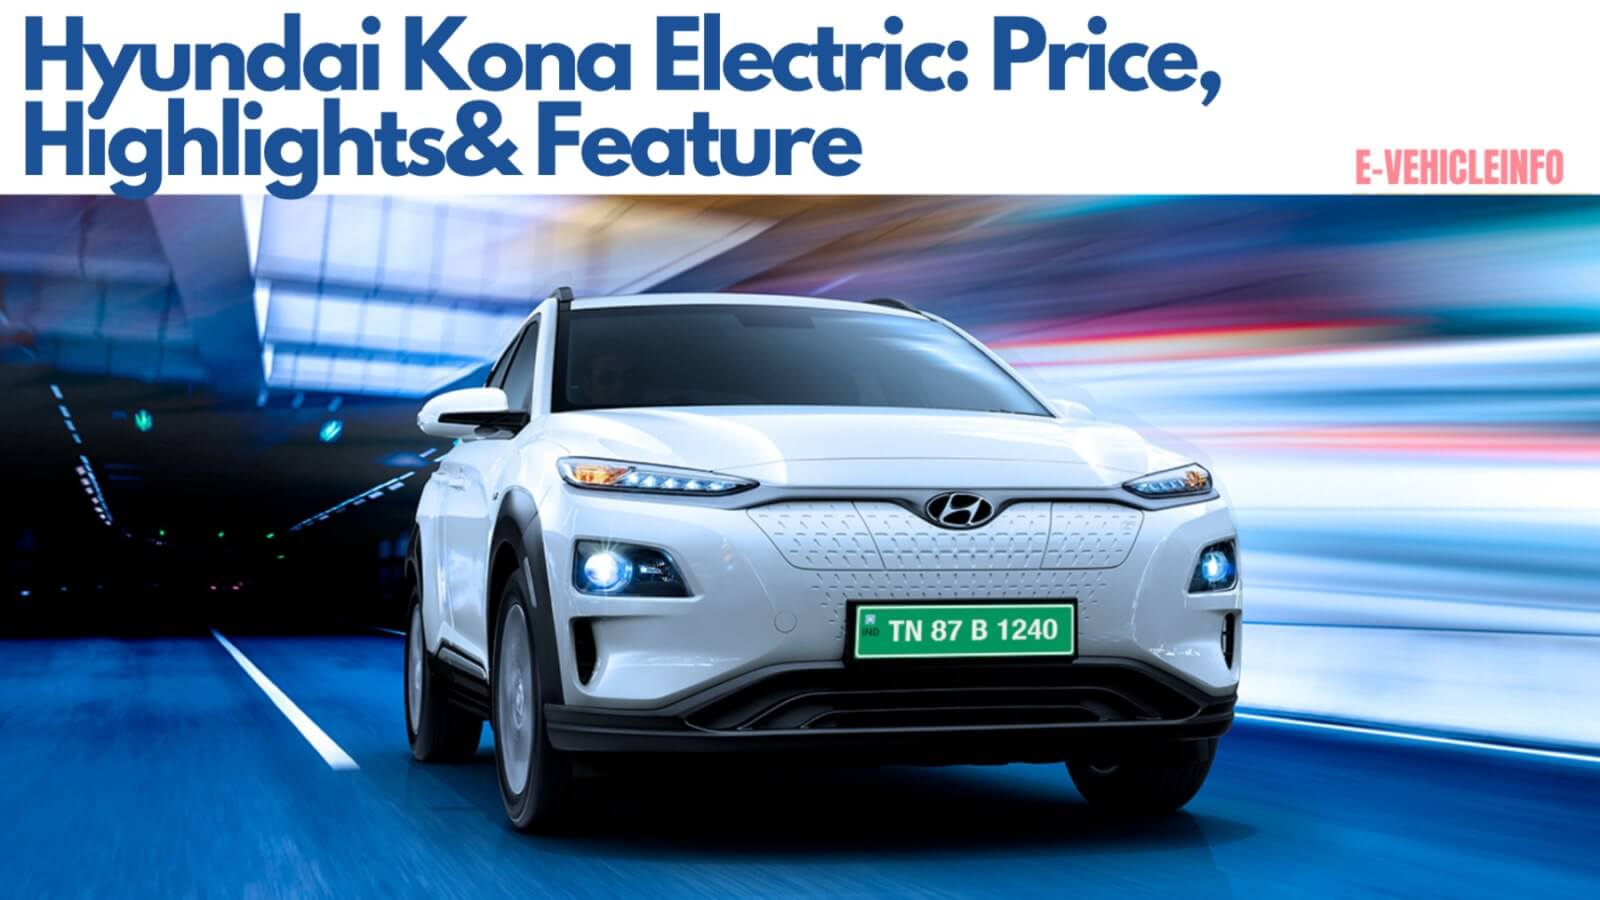 https://e-vehicleinfo.com/hyundai-kona-electric-price-in-india-highlights-feature/